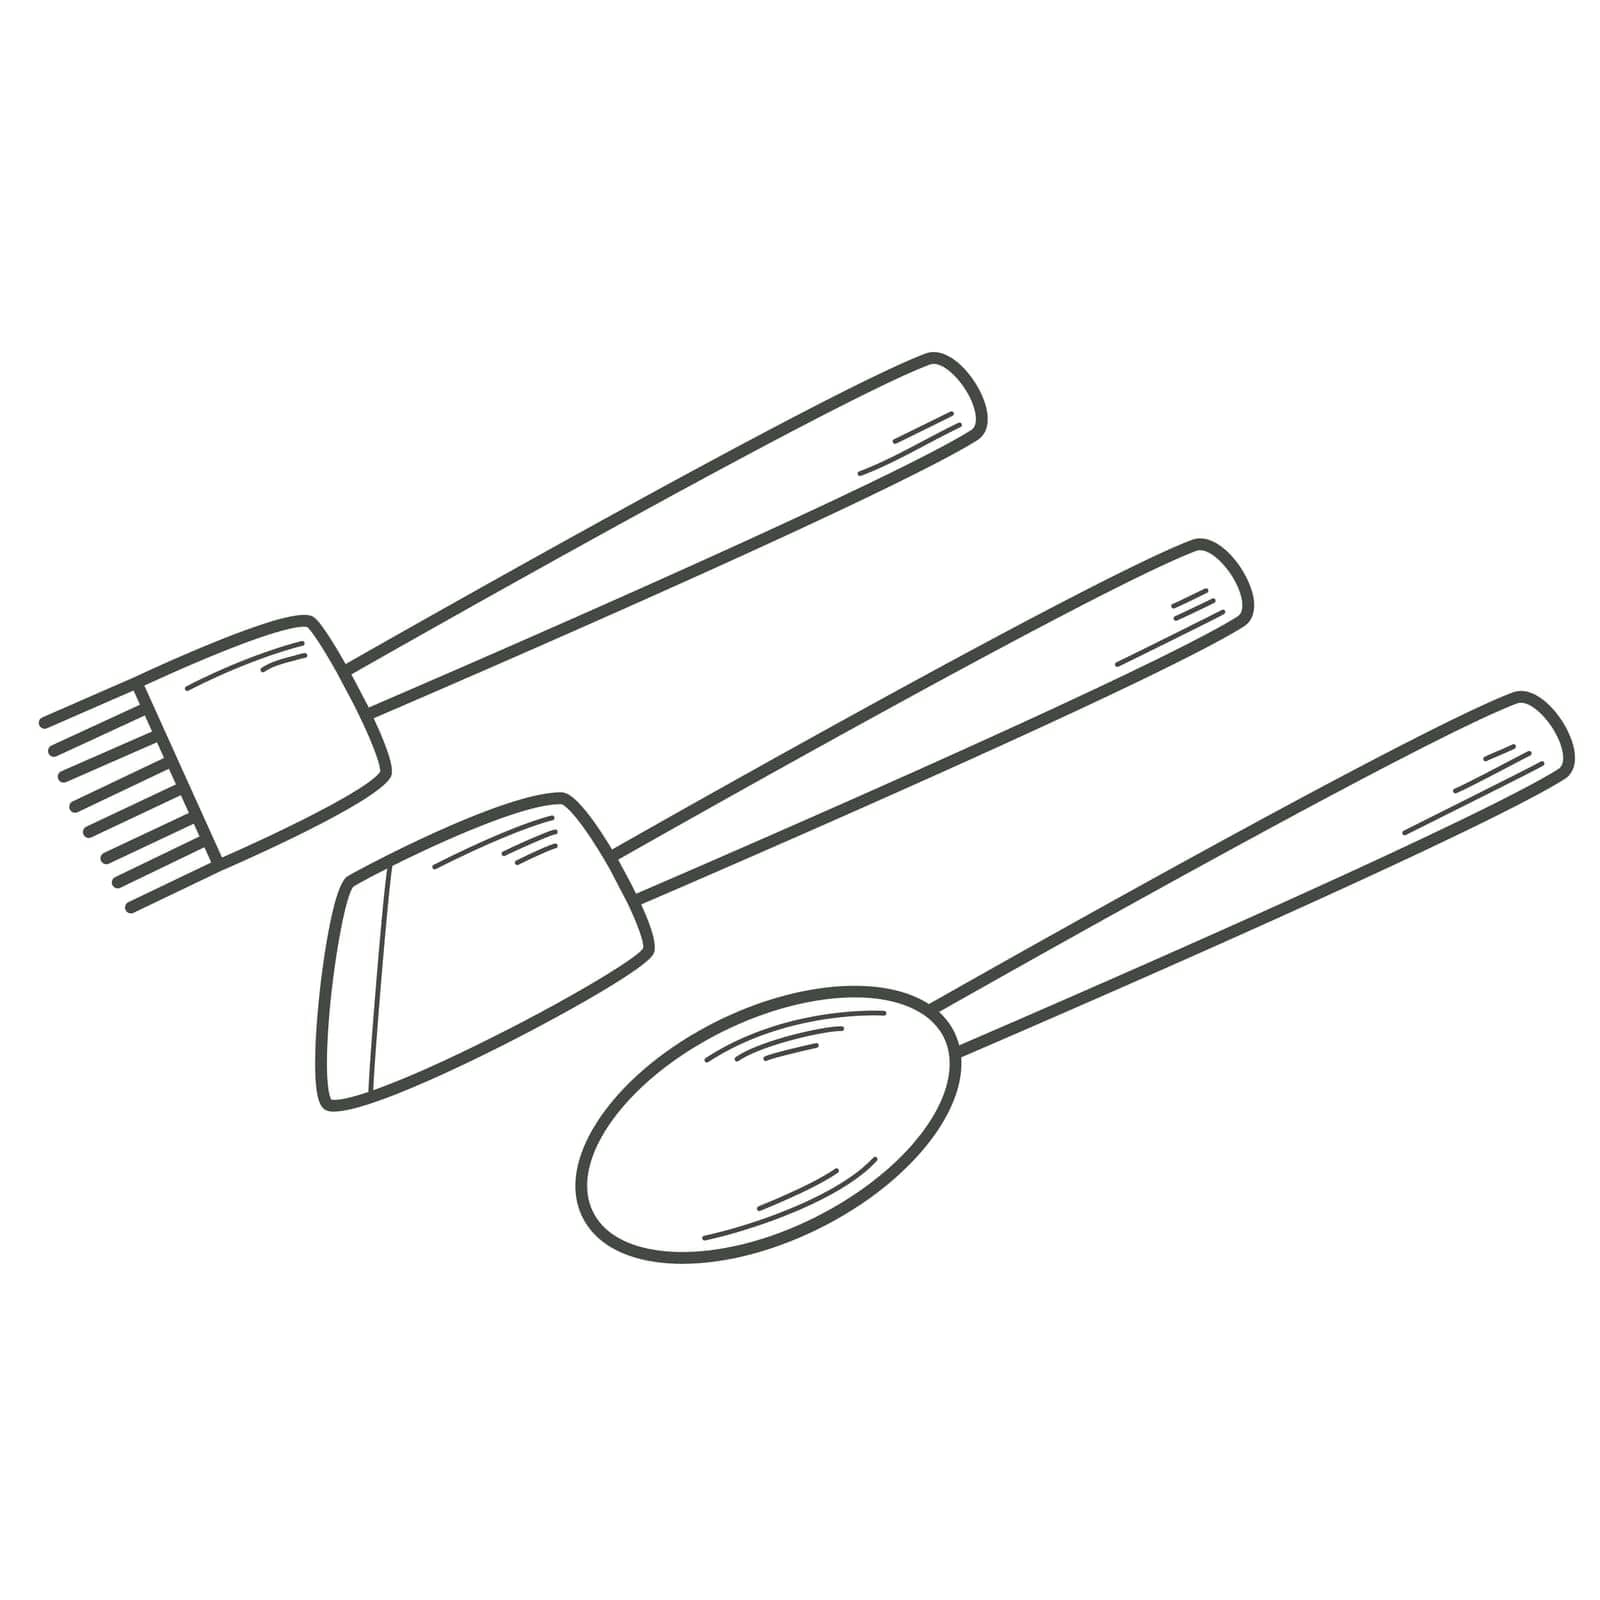 Kitchen spatula doodle sketch style by TassiaK